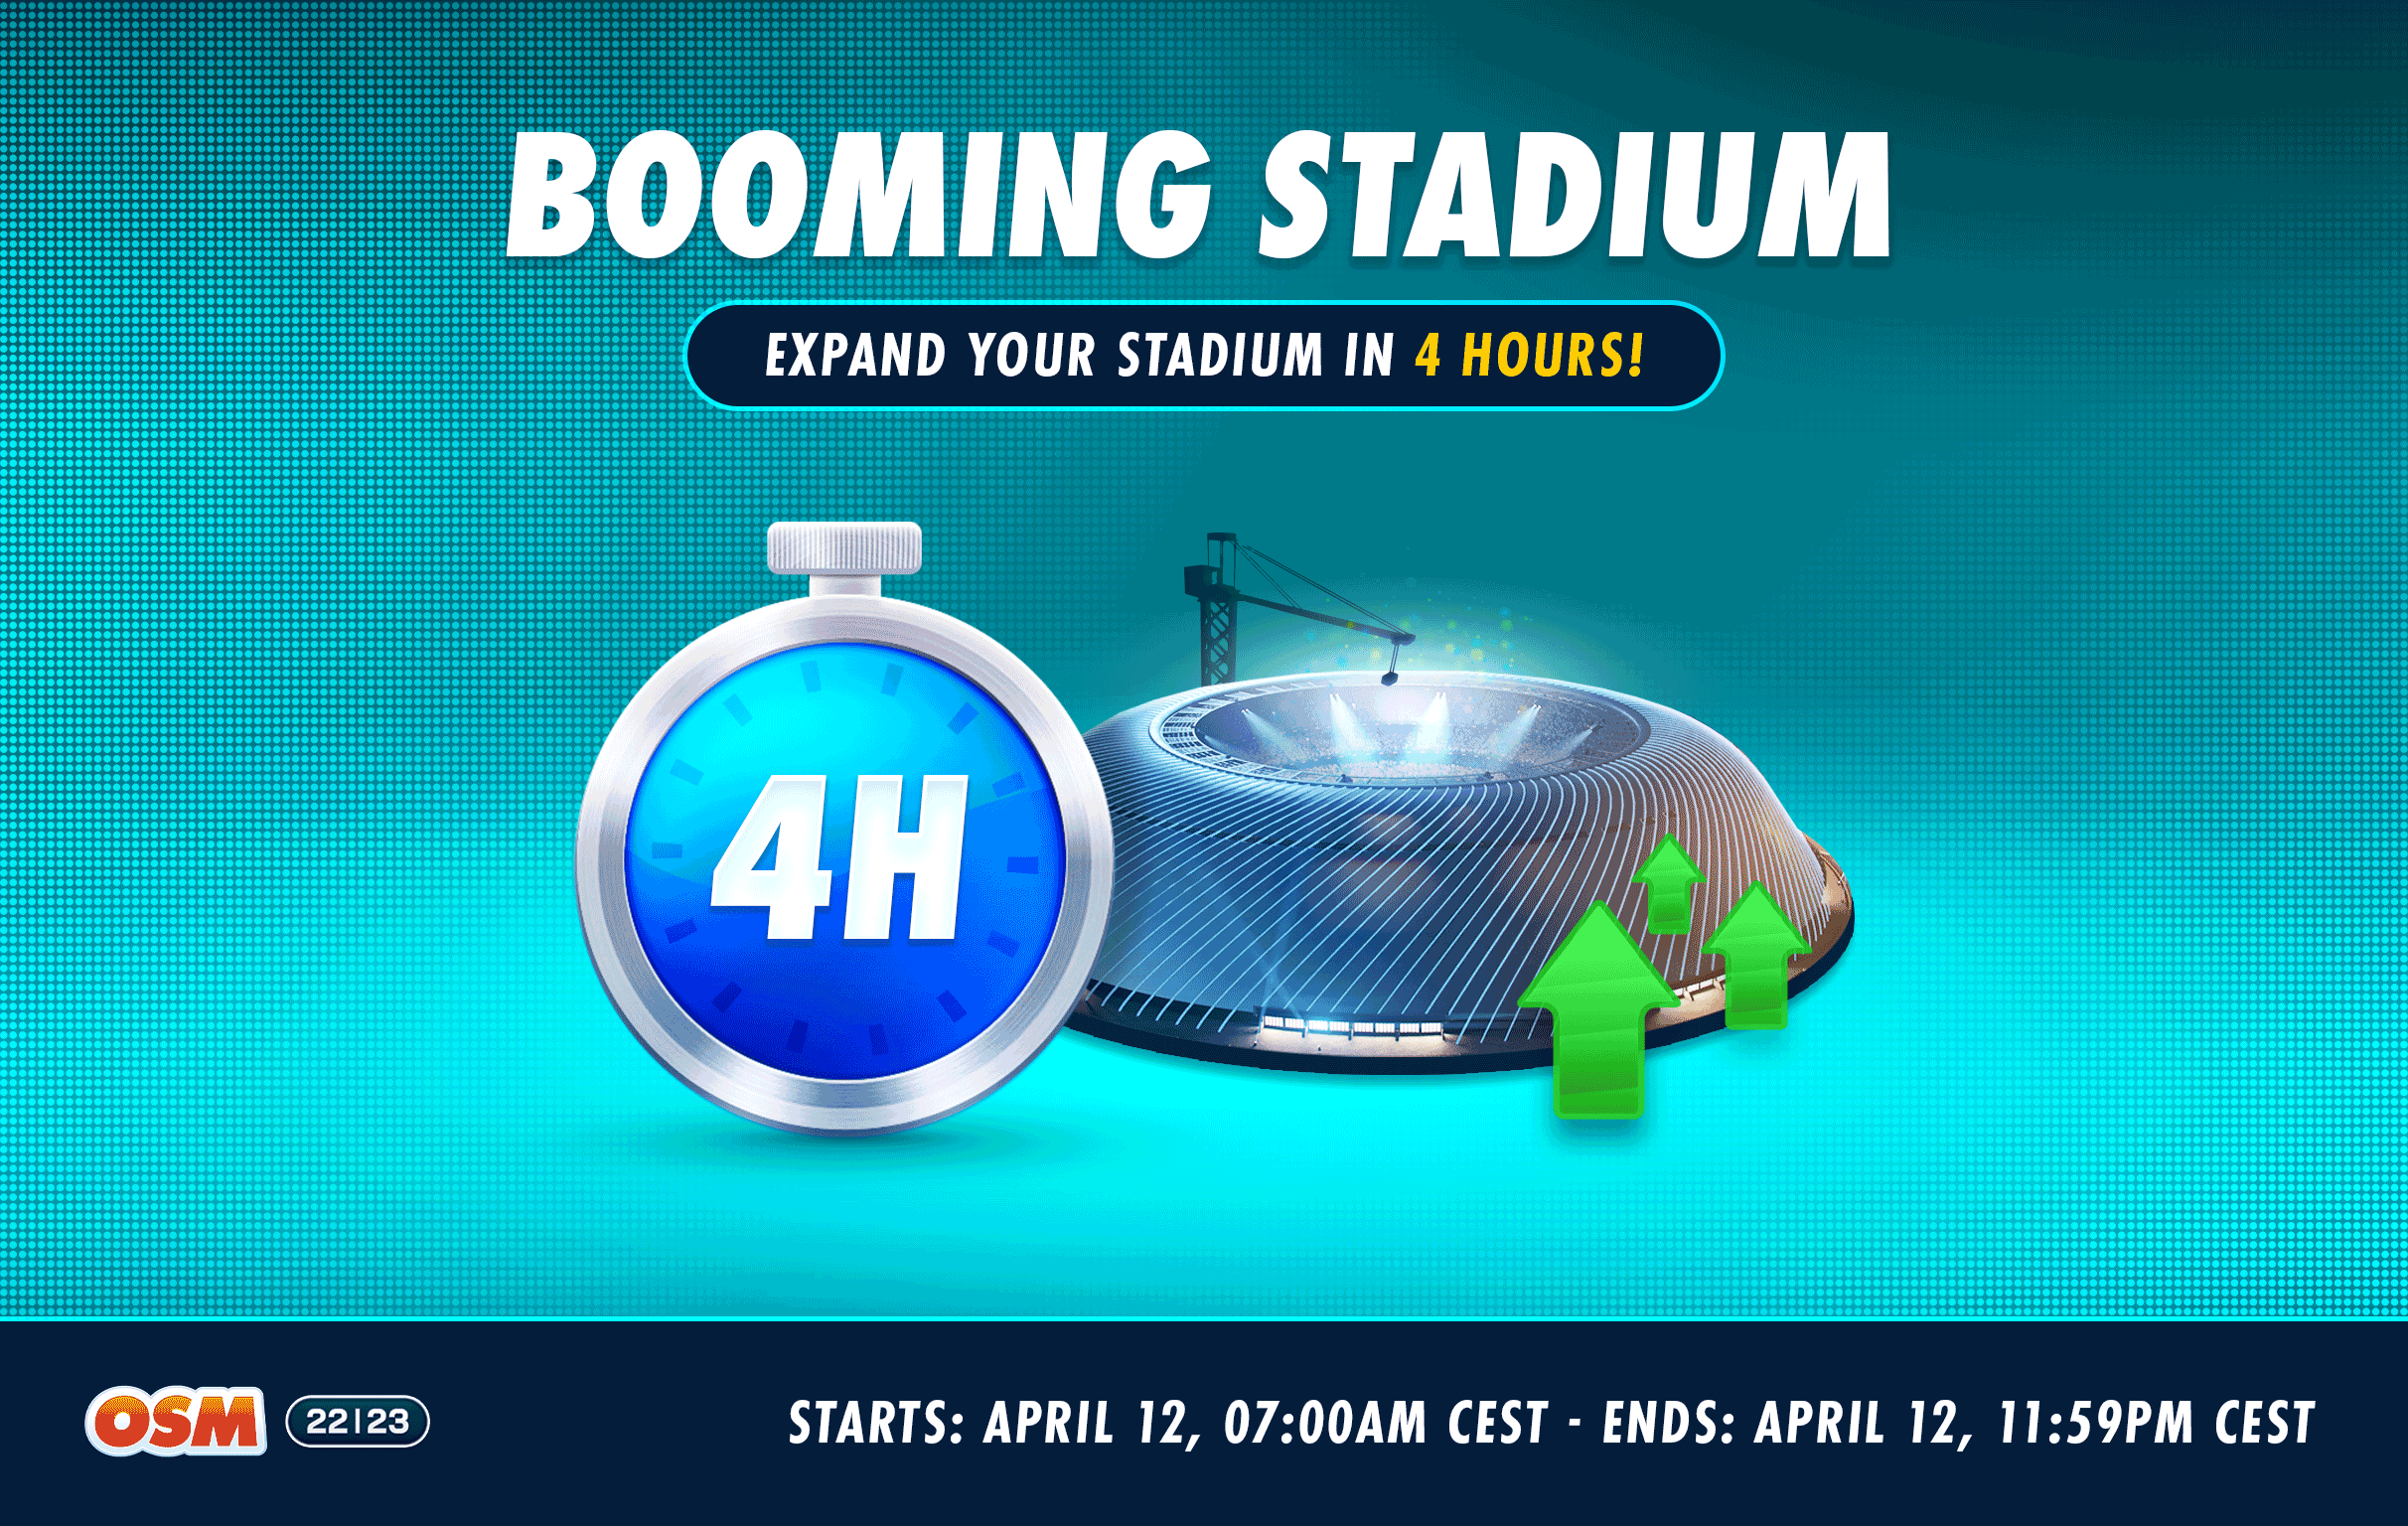 Forum_Booming-Stadium_REDDIT.png